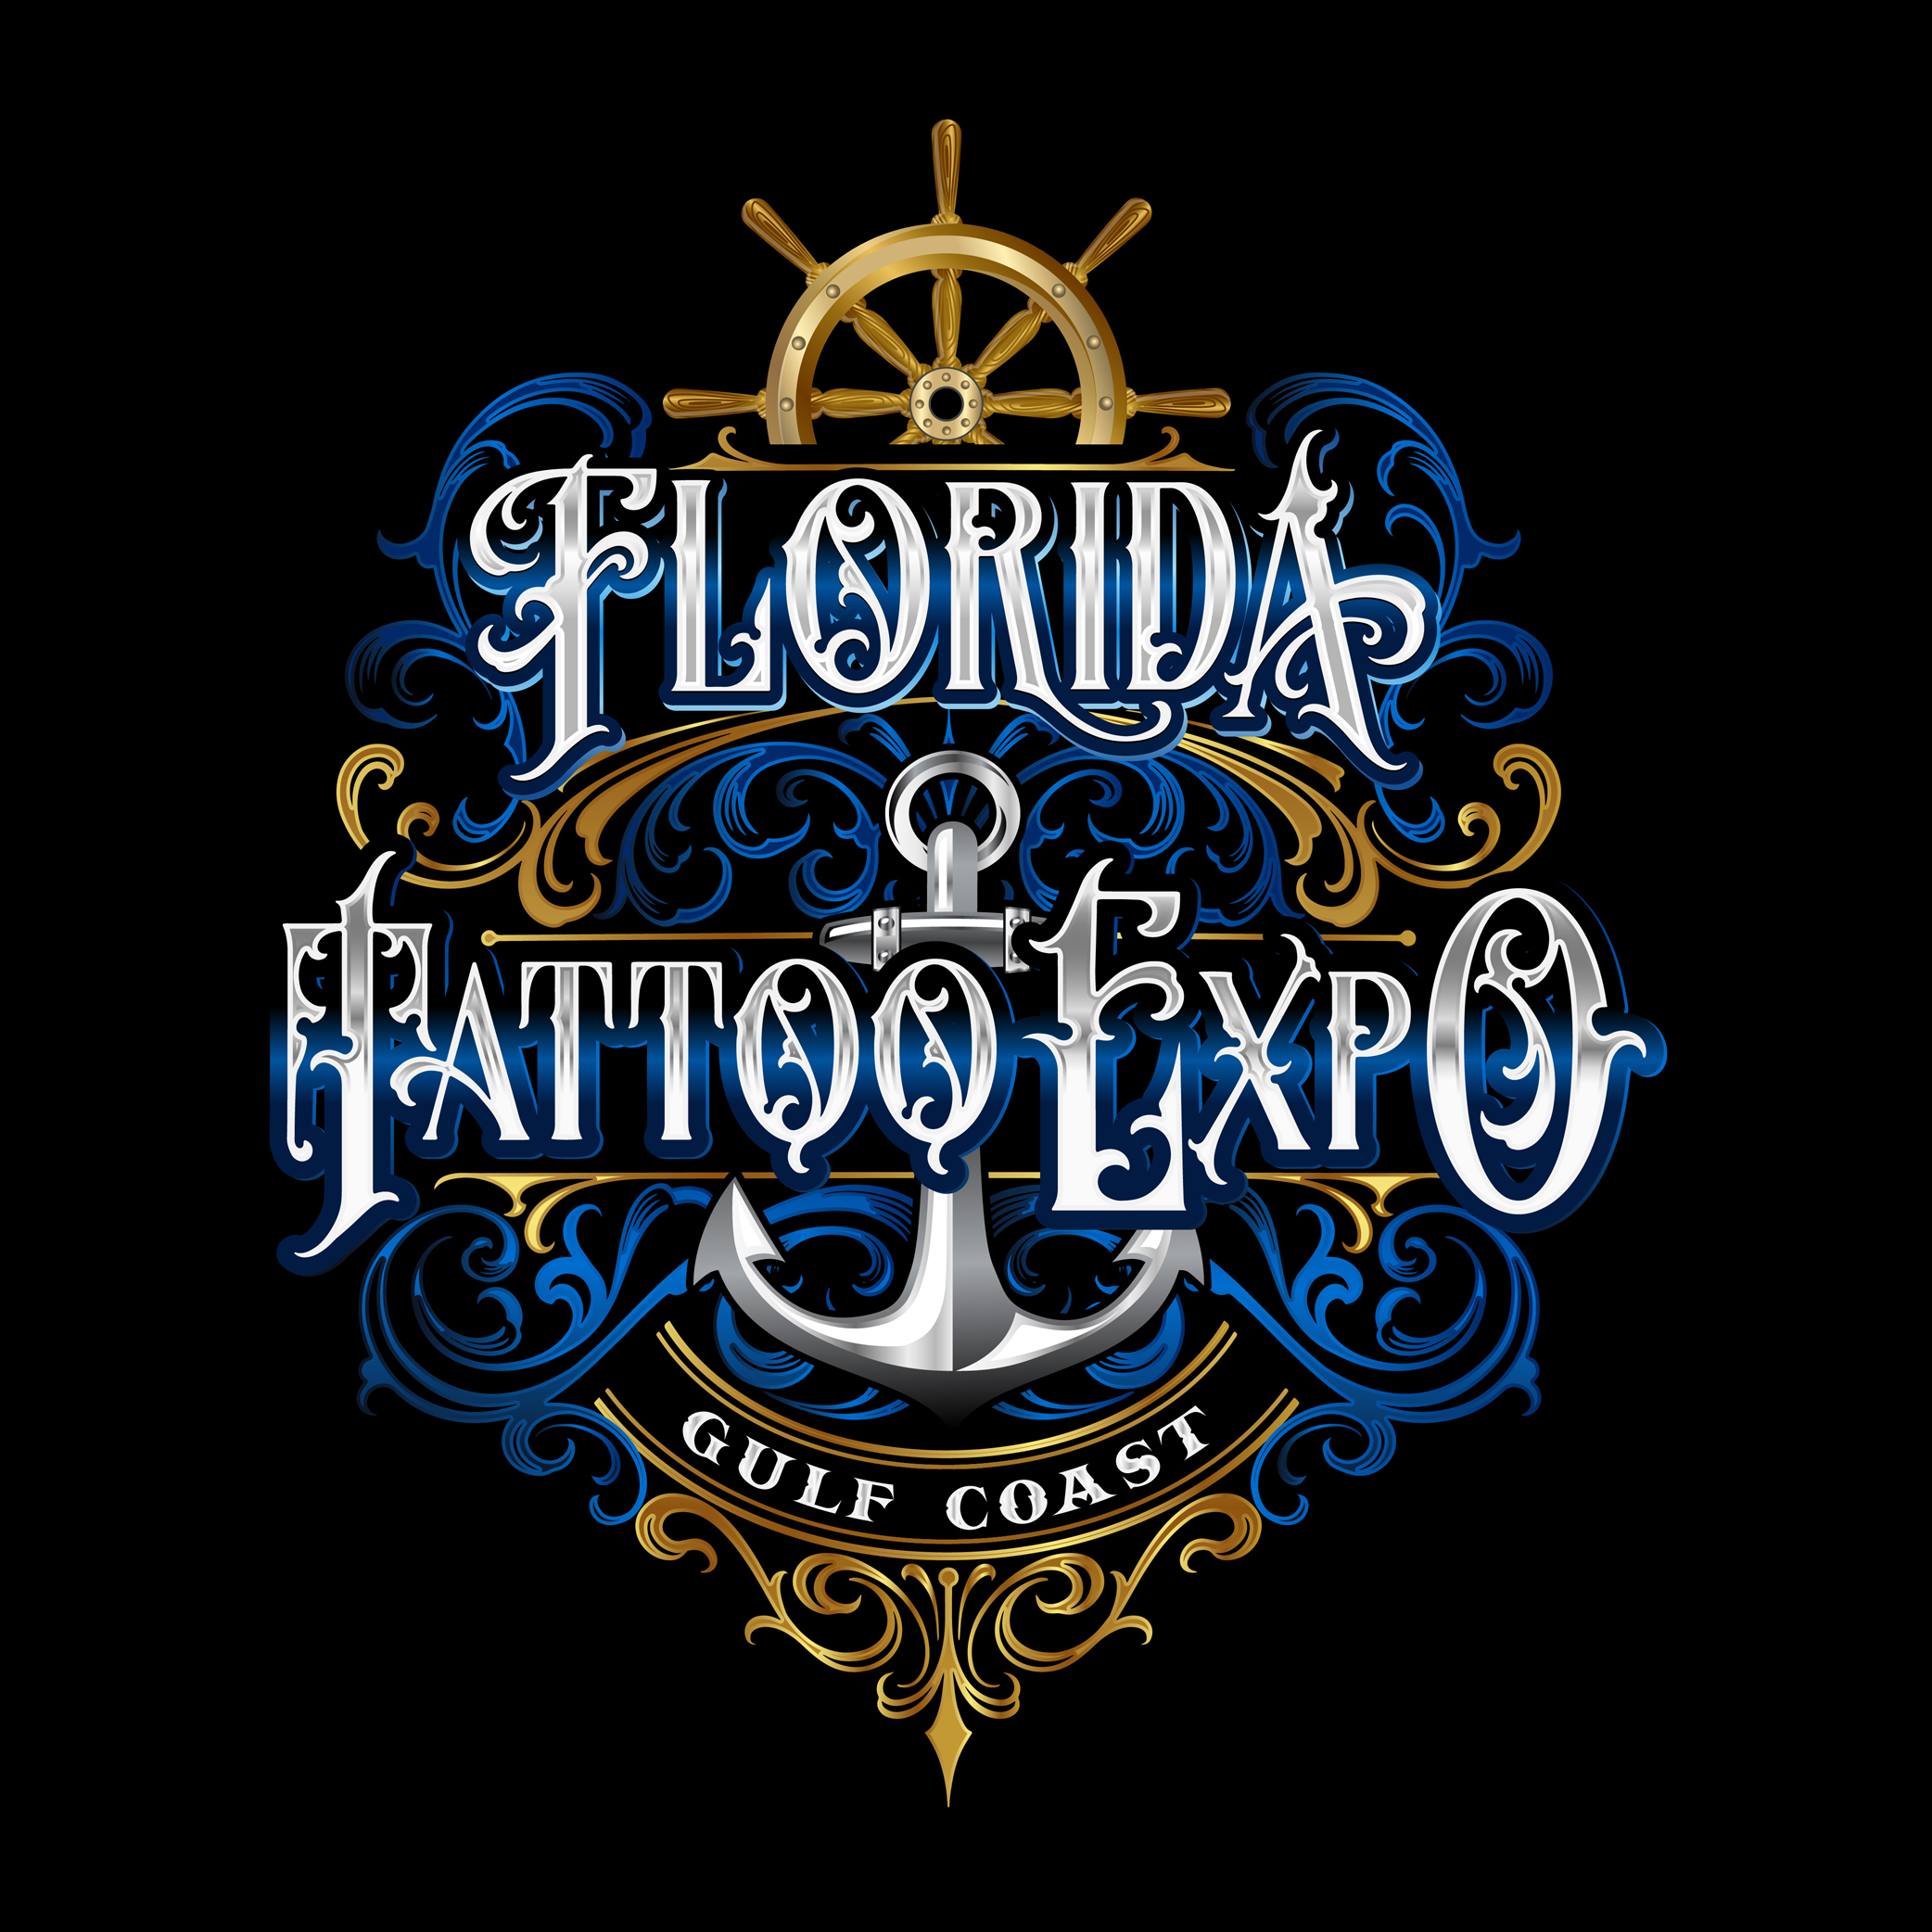 American Traditional Tattoos Available at Rad Ink Florida - Rad Ink